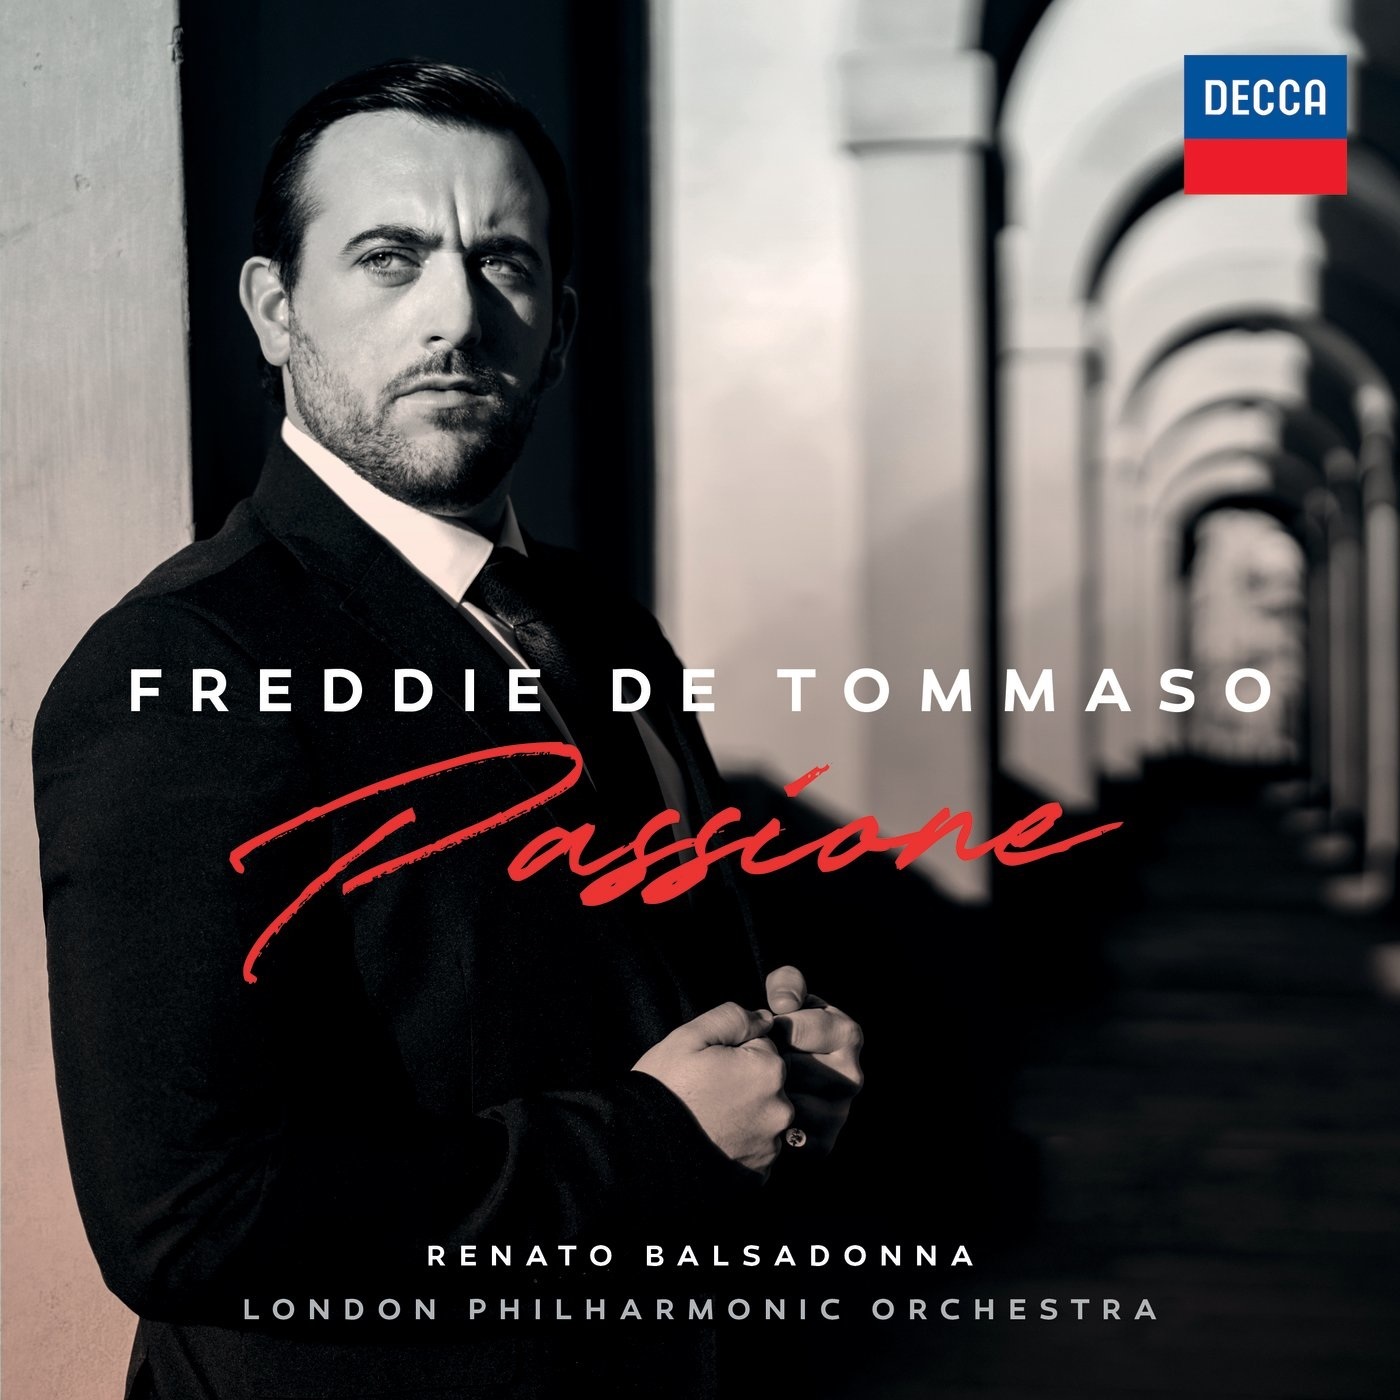 Freddie De Tommaso, London Philharmonic Orchestra & Renato Balsadonna - Passione (2021) [FLAC 24bit/96kHz]